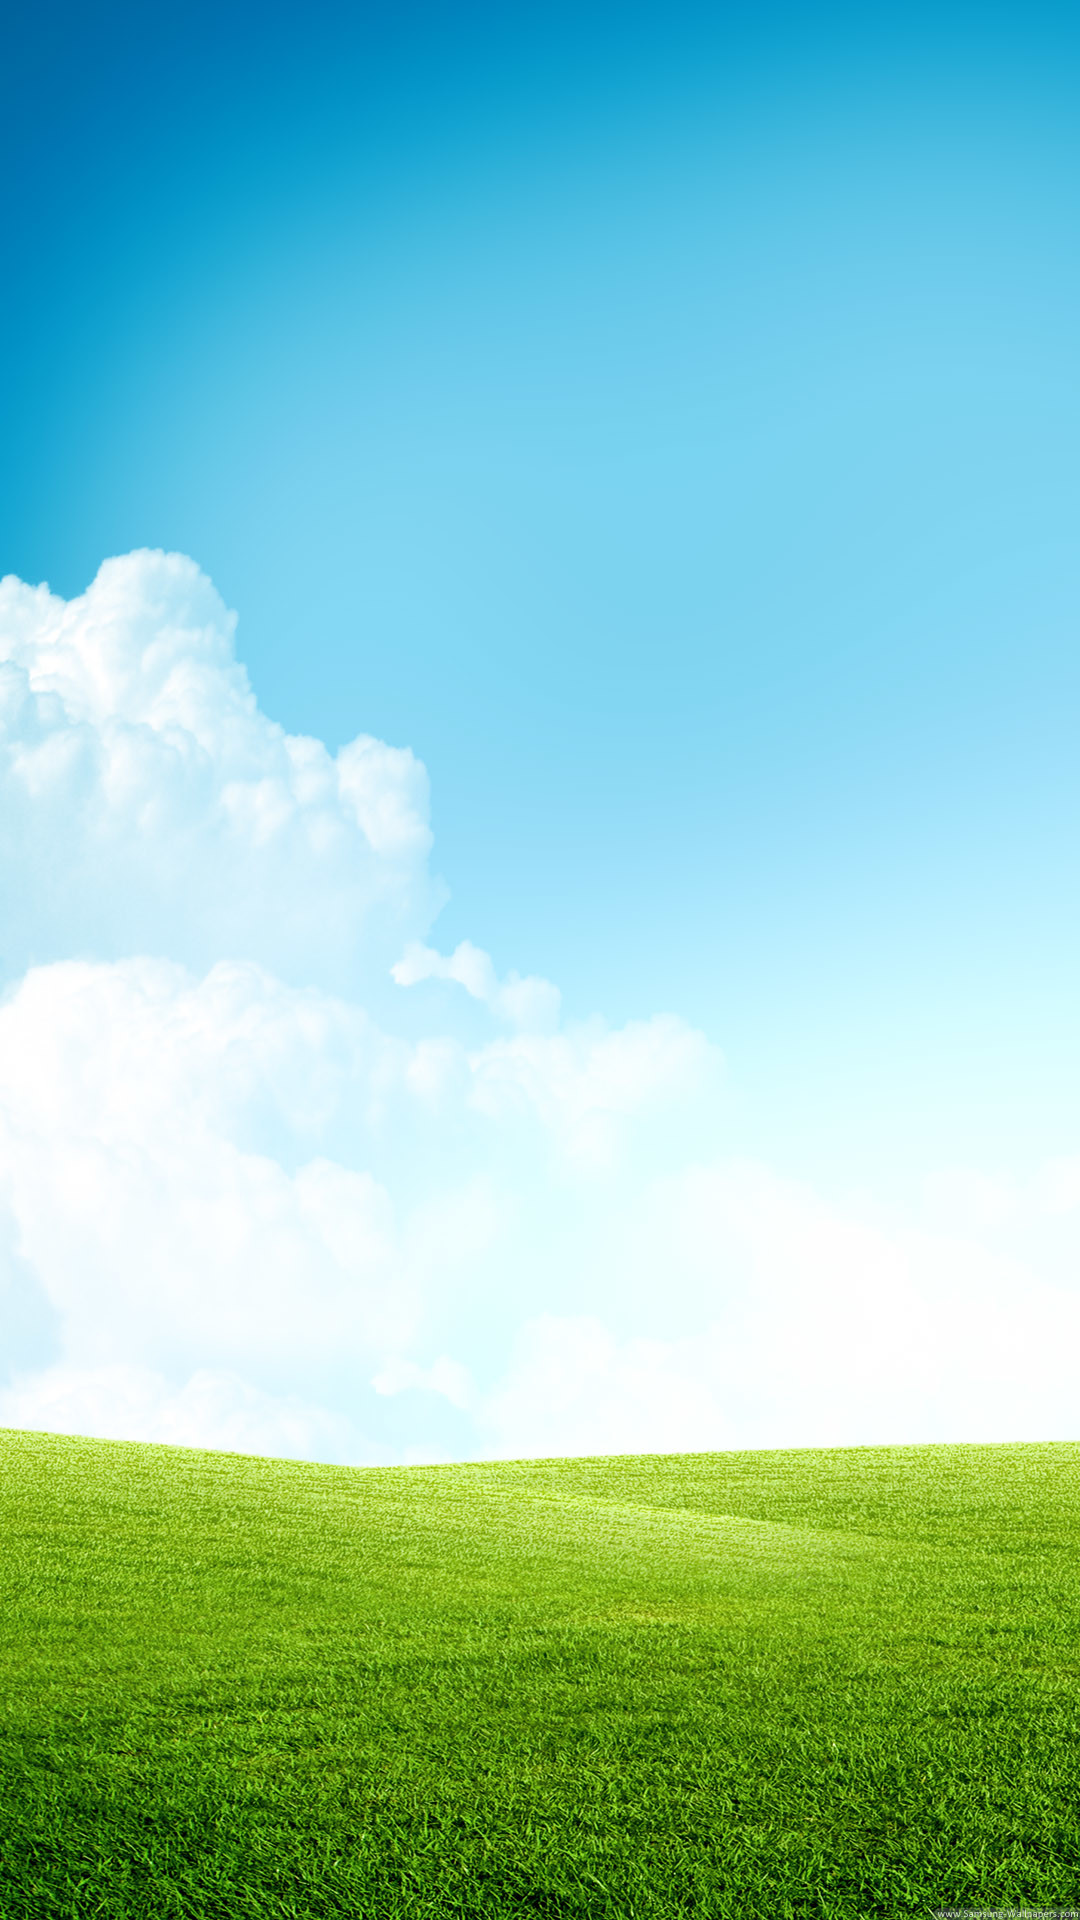 1080x1920 Grass Field Blue Sky Clouds iPhone 6 Plus HD Wallpaper ...